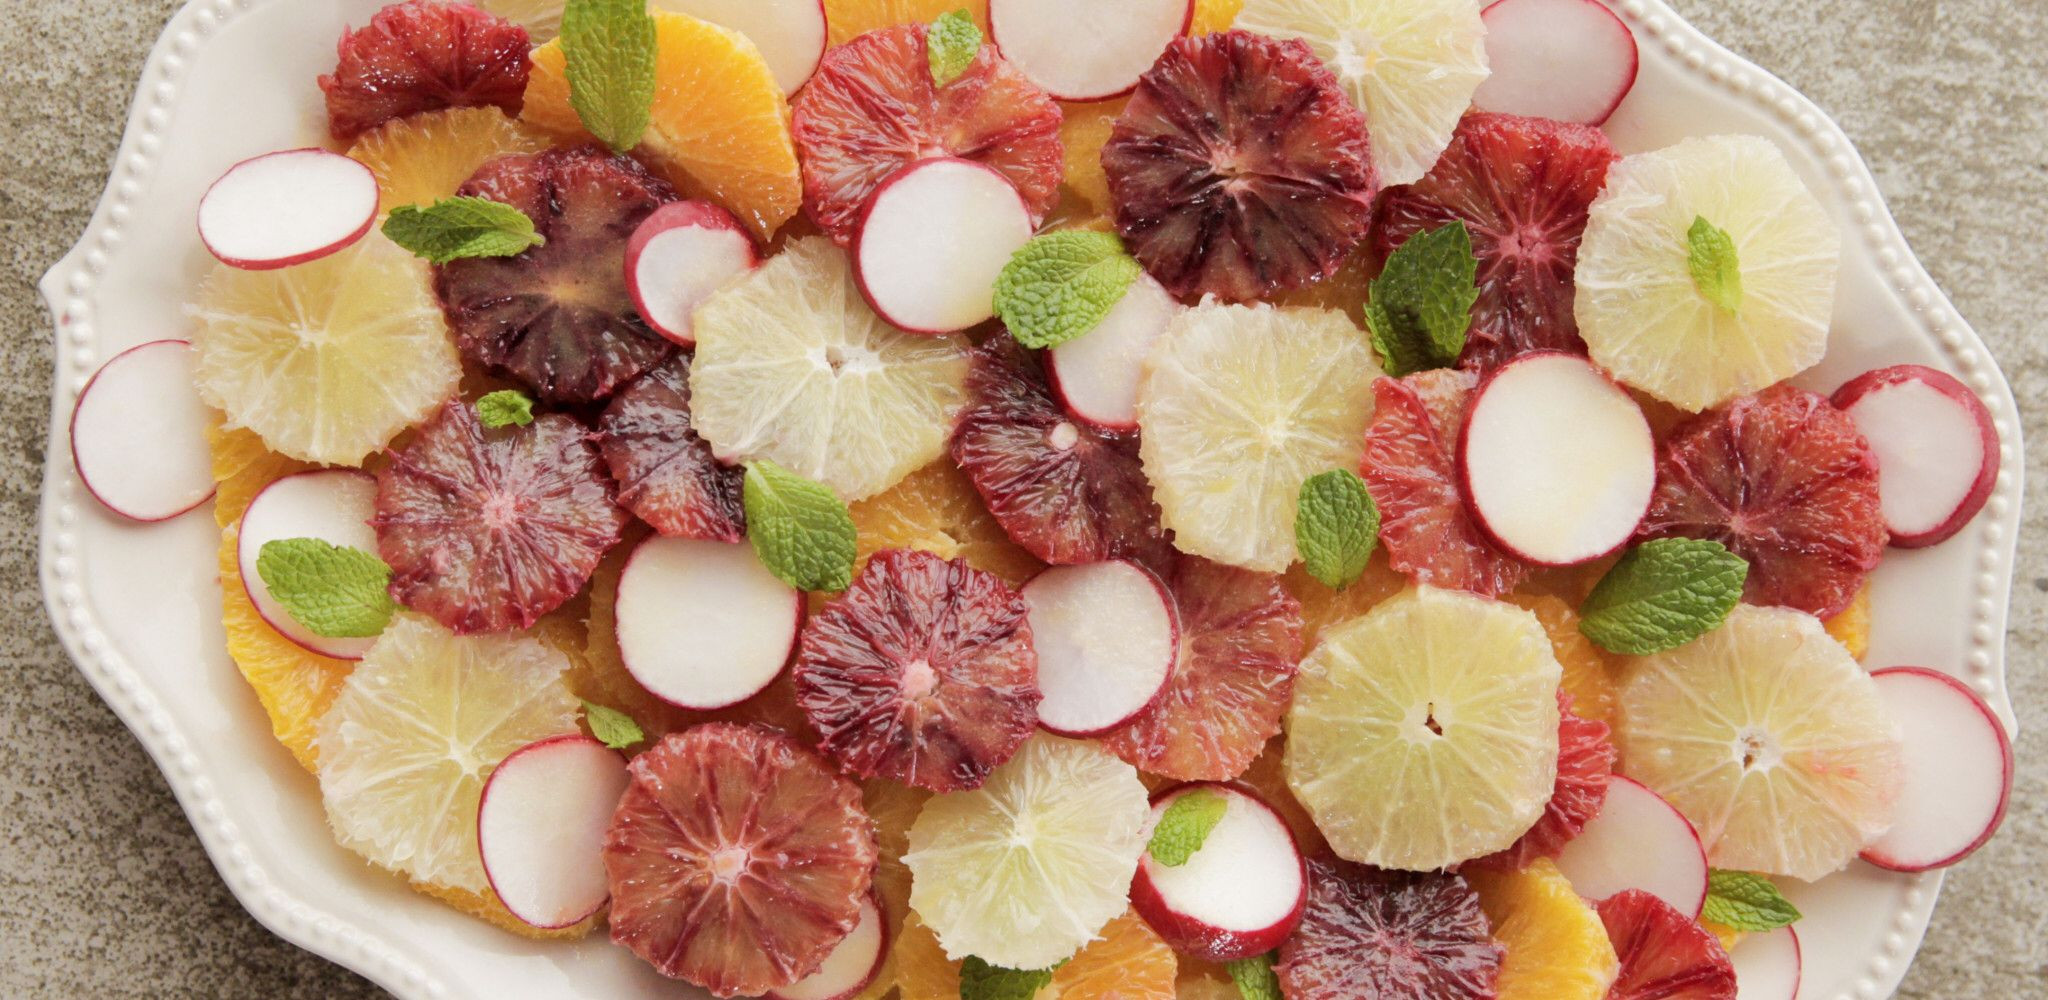 Brunch Desserts Food Network
 Citrus Salad Recipe